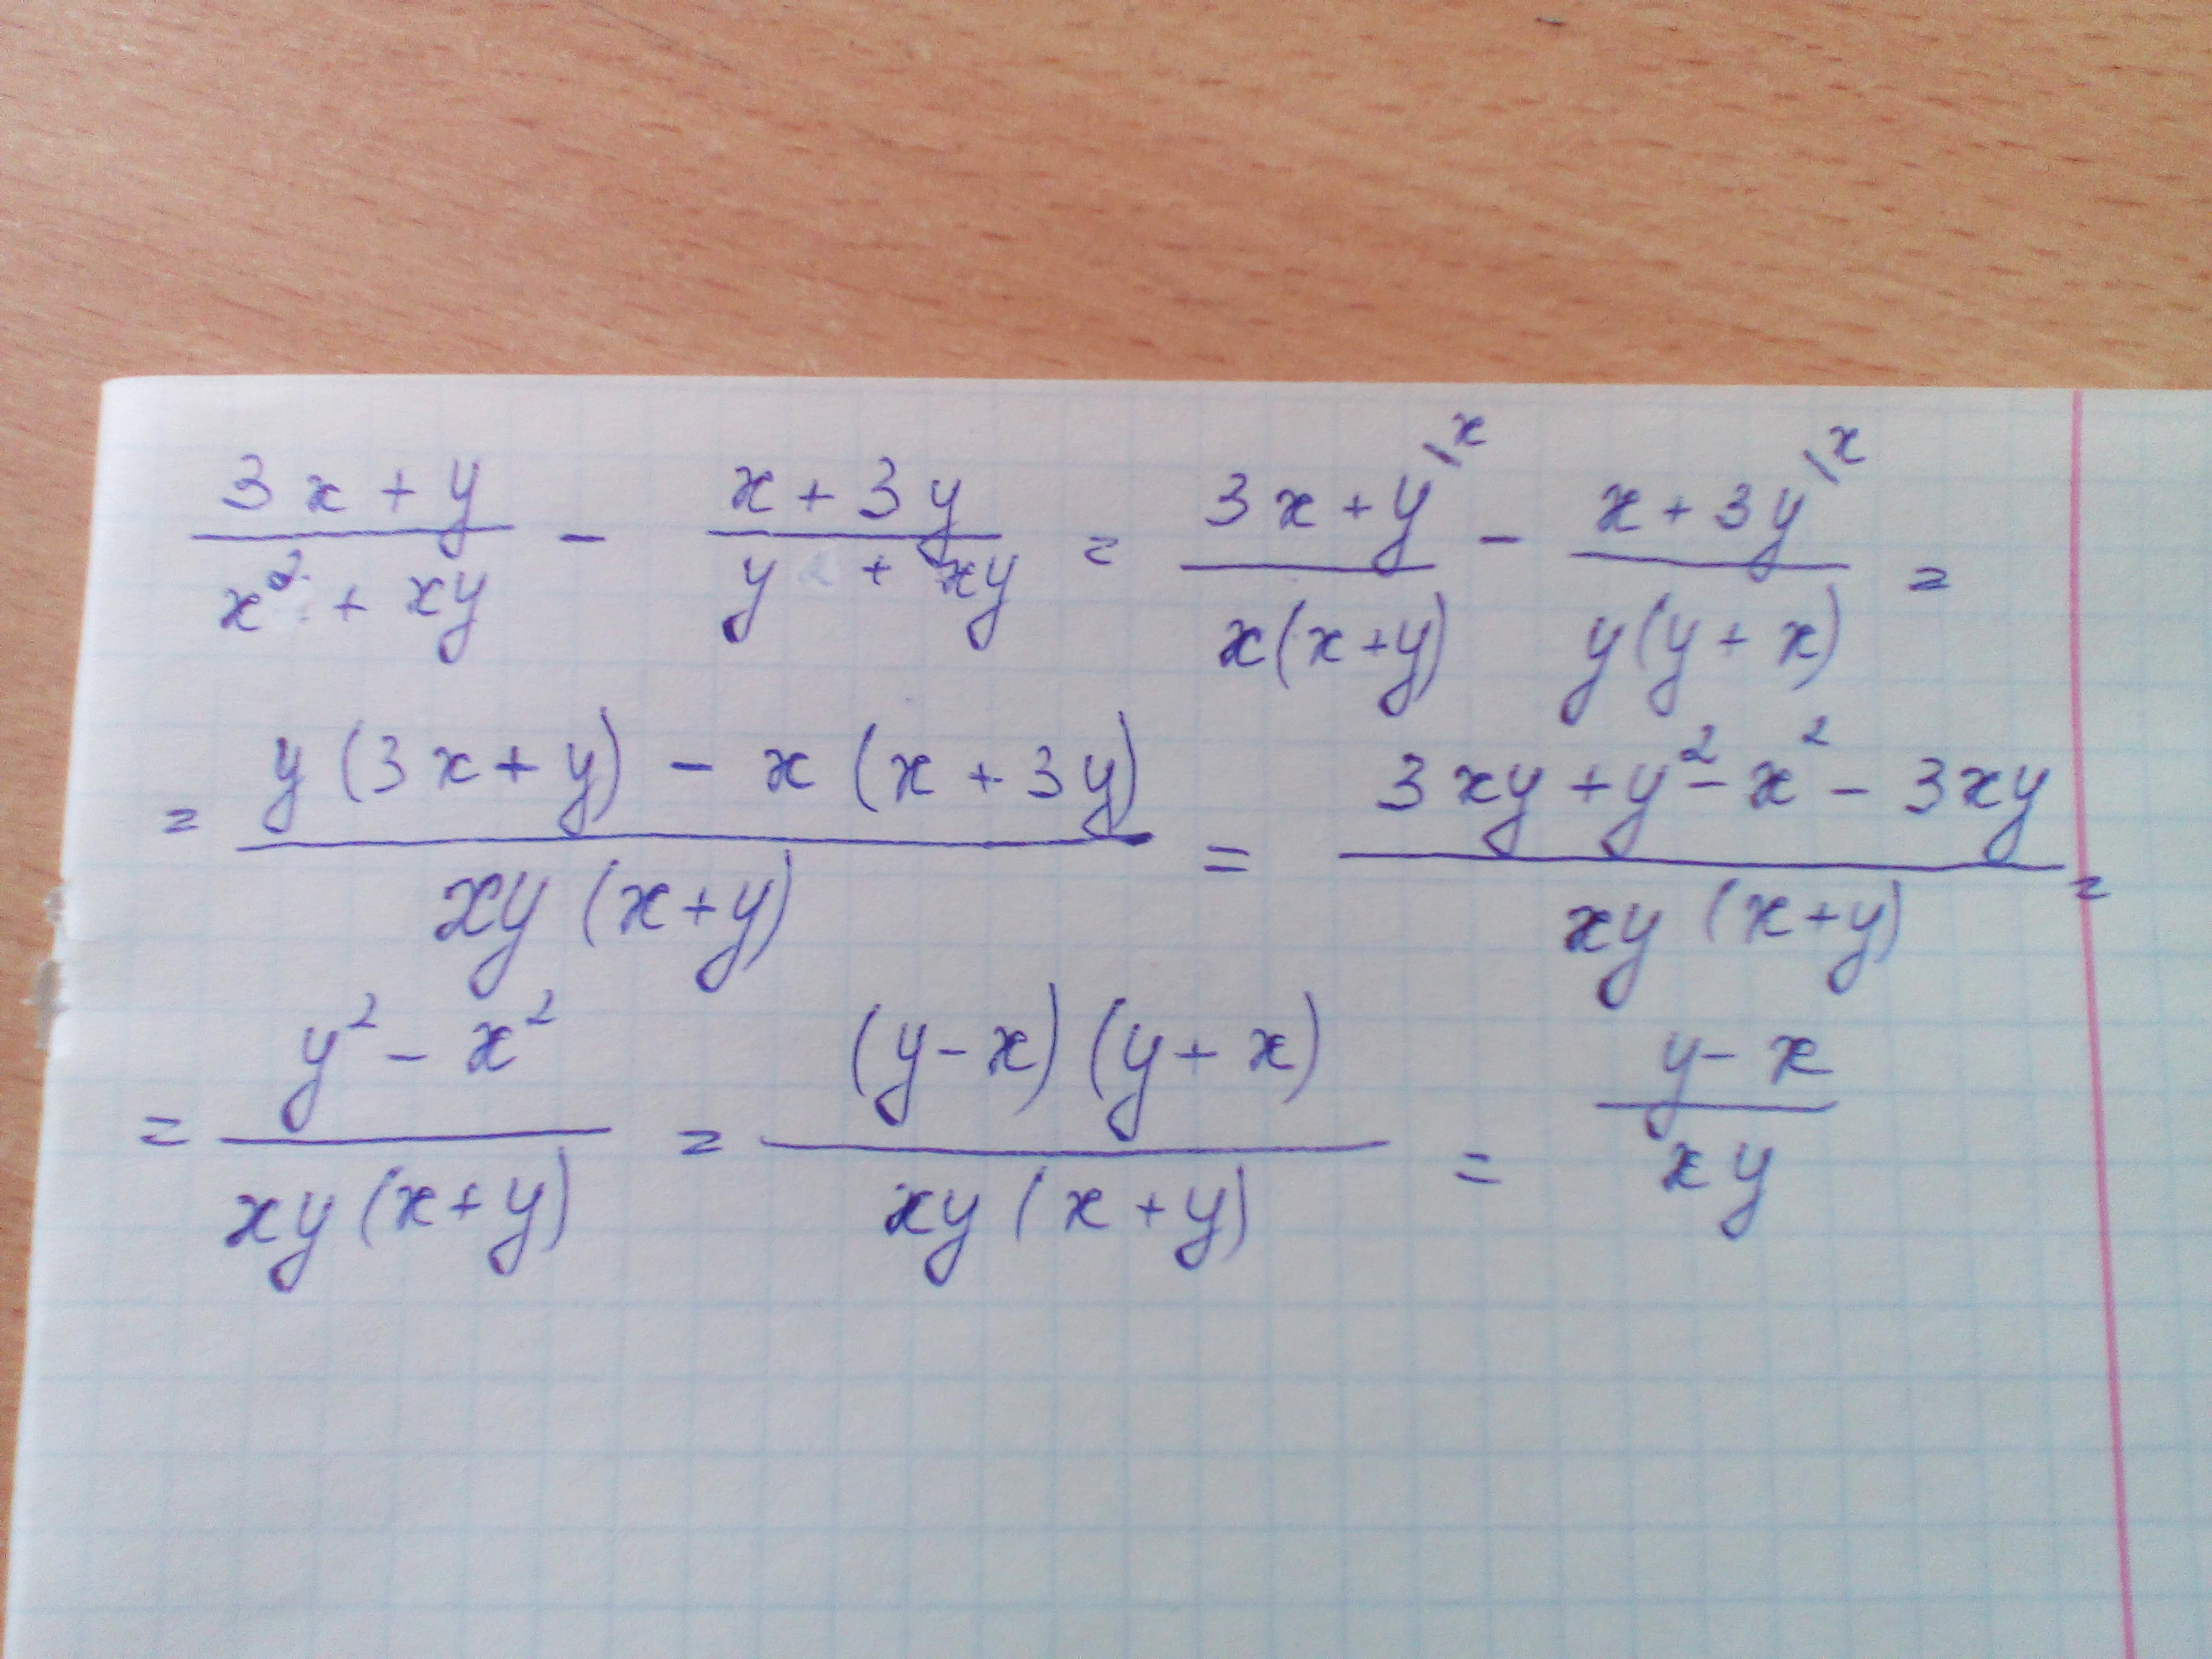 X2 y xy 3 y2. X 2 +Y 2 =2x+2y+XY. Упростить выражение x^2-y^2/x^2-2xy+y^2. 3x+y/x2+XY-X+3y/y2+XY. 3x+y/x2+XY-X+3y/y2+XY упростите выражение.